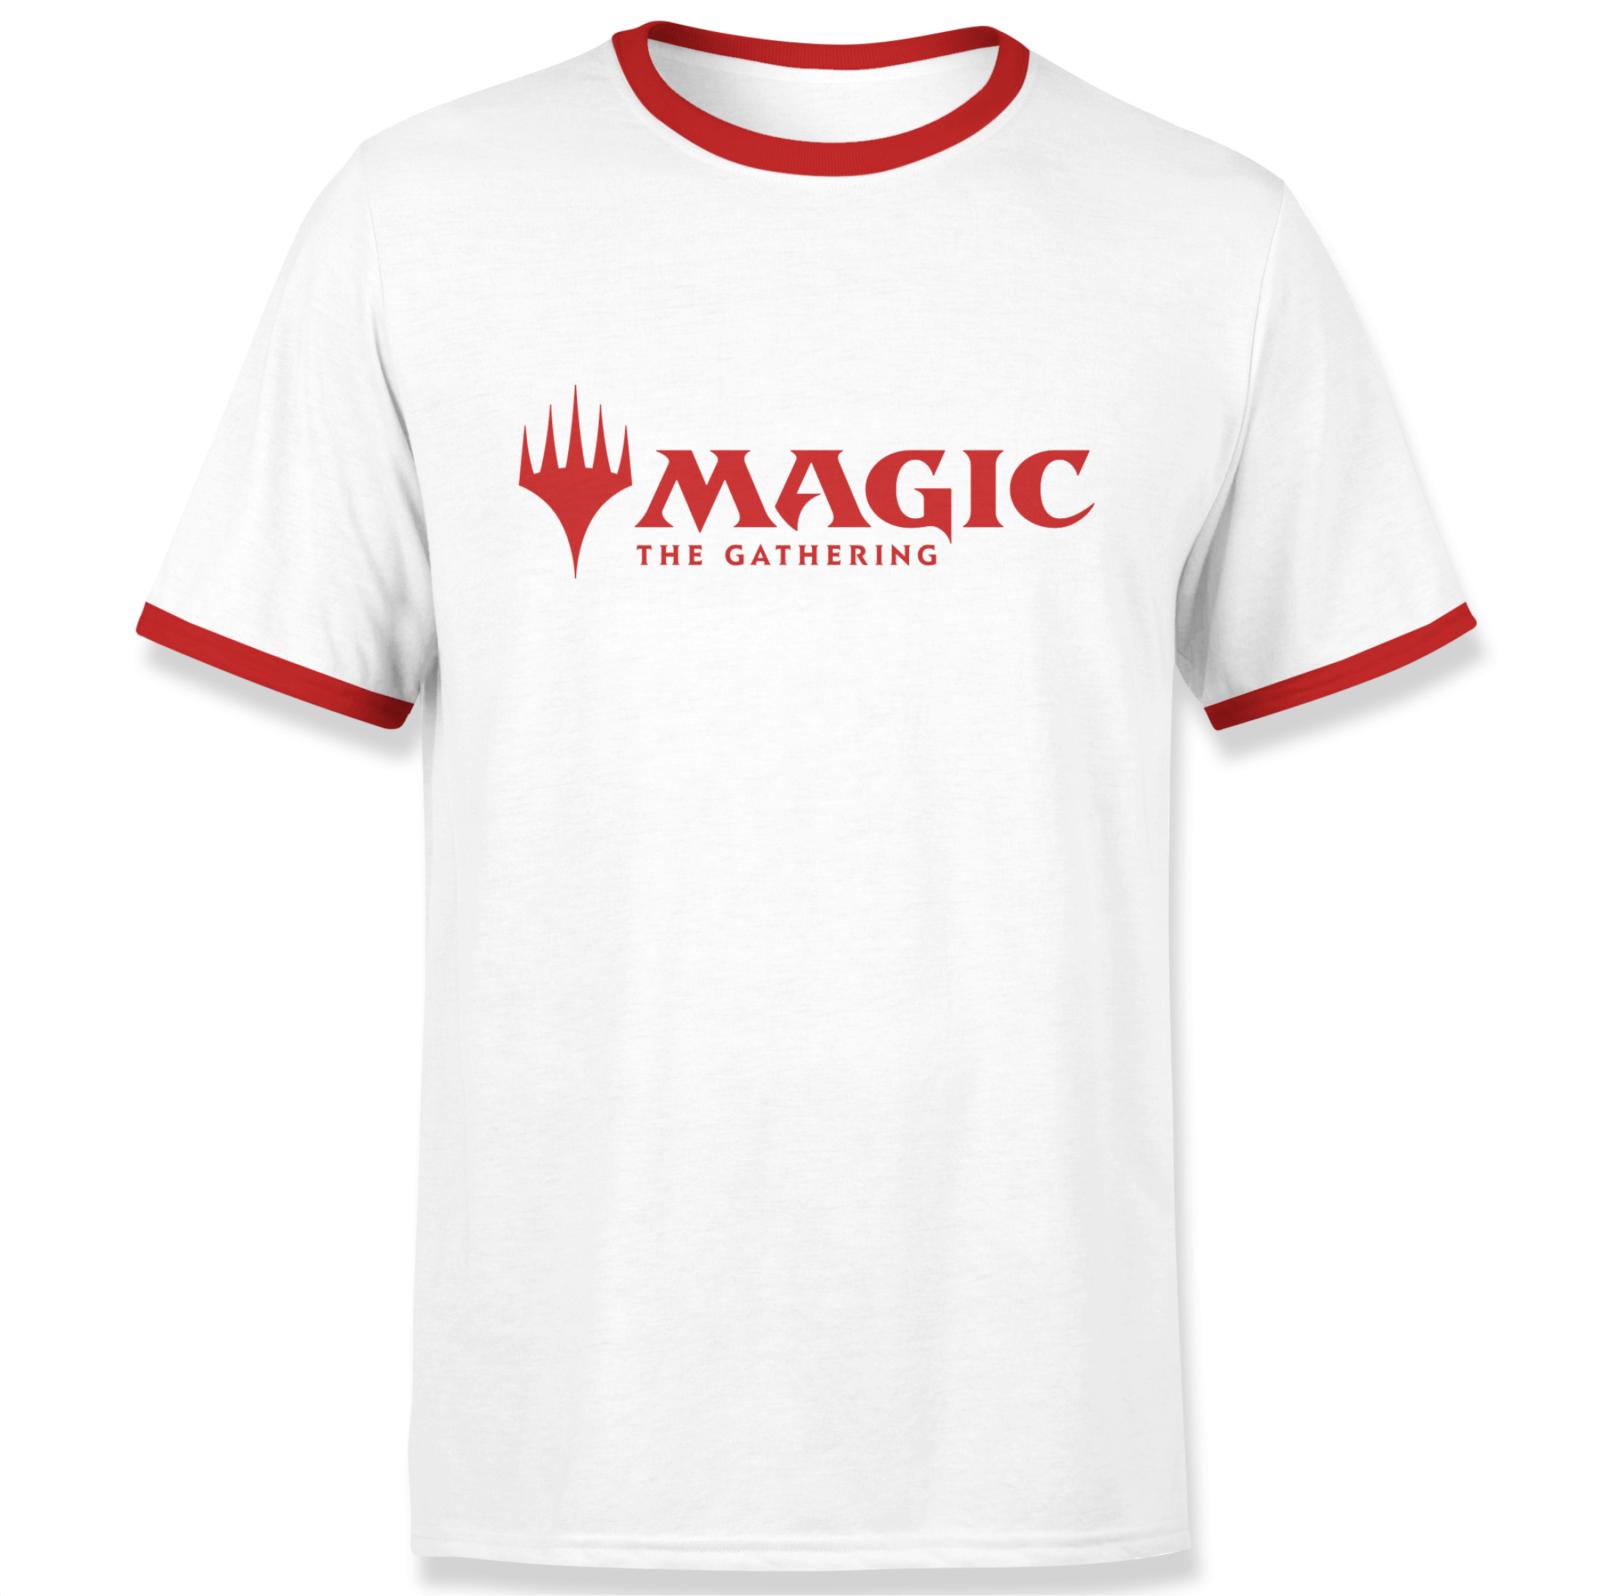 Magic The Gathering Logo Men's Ringer - White/Red - XL